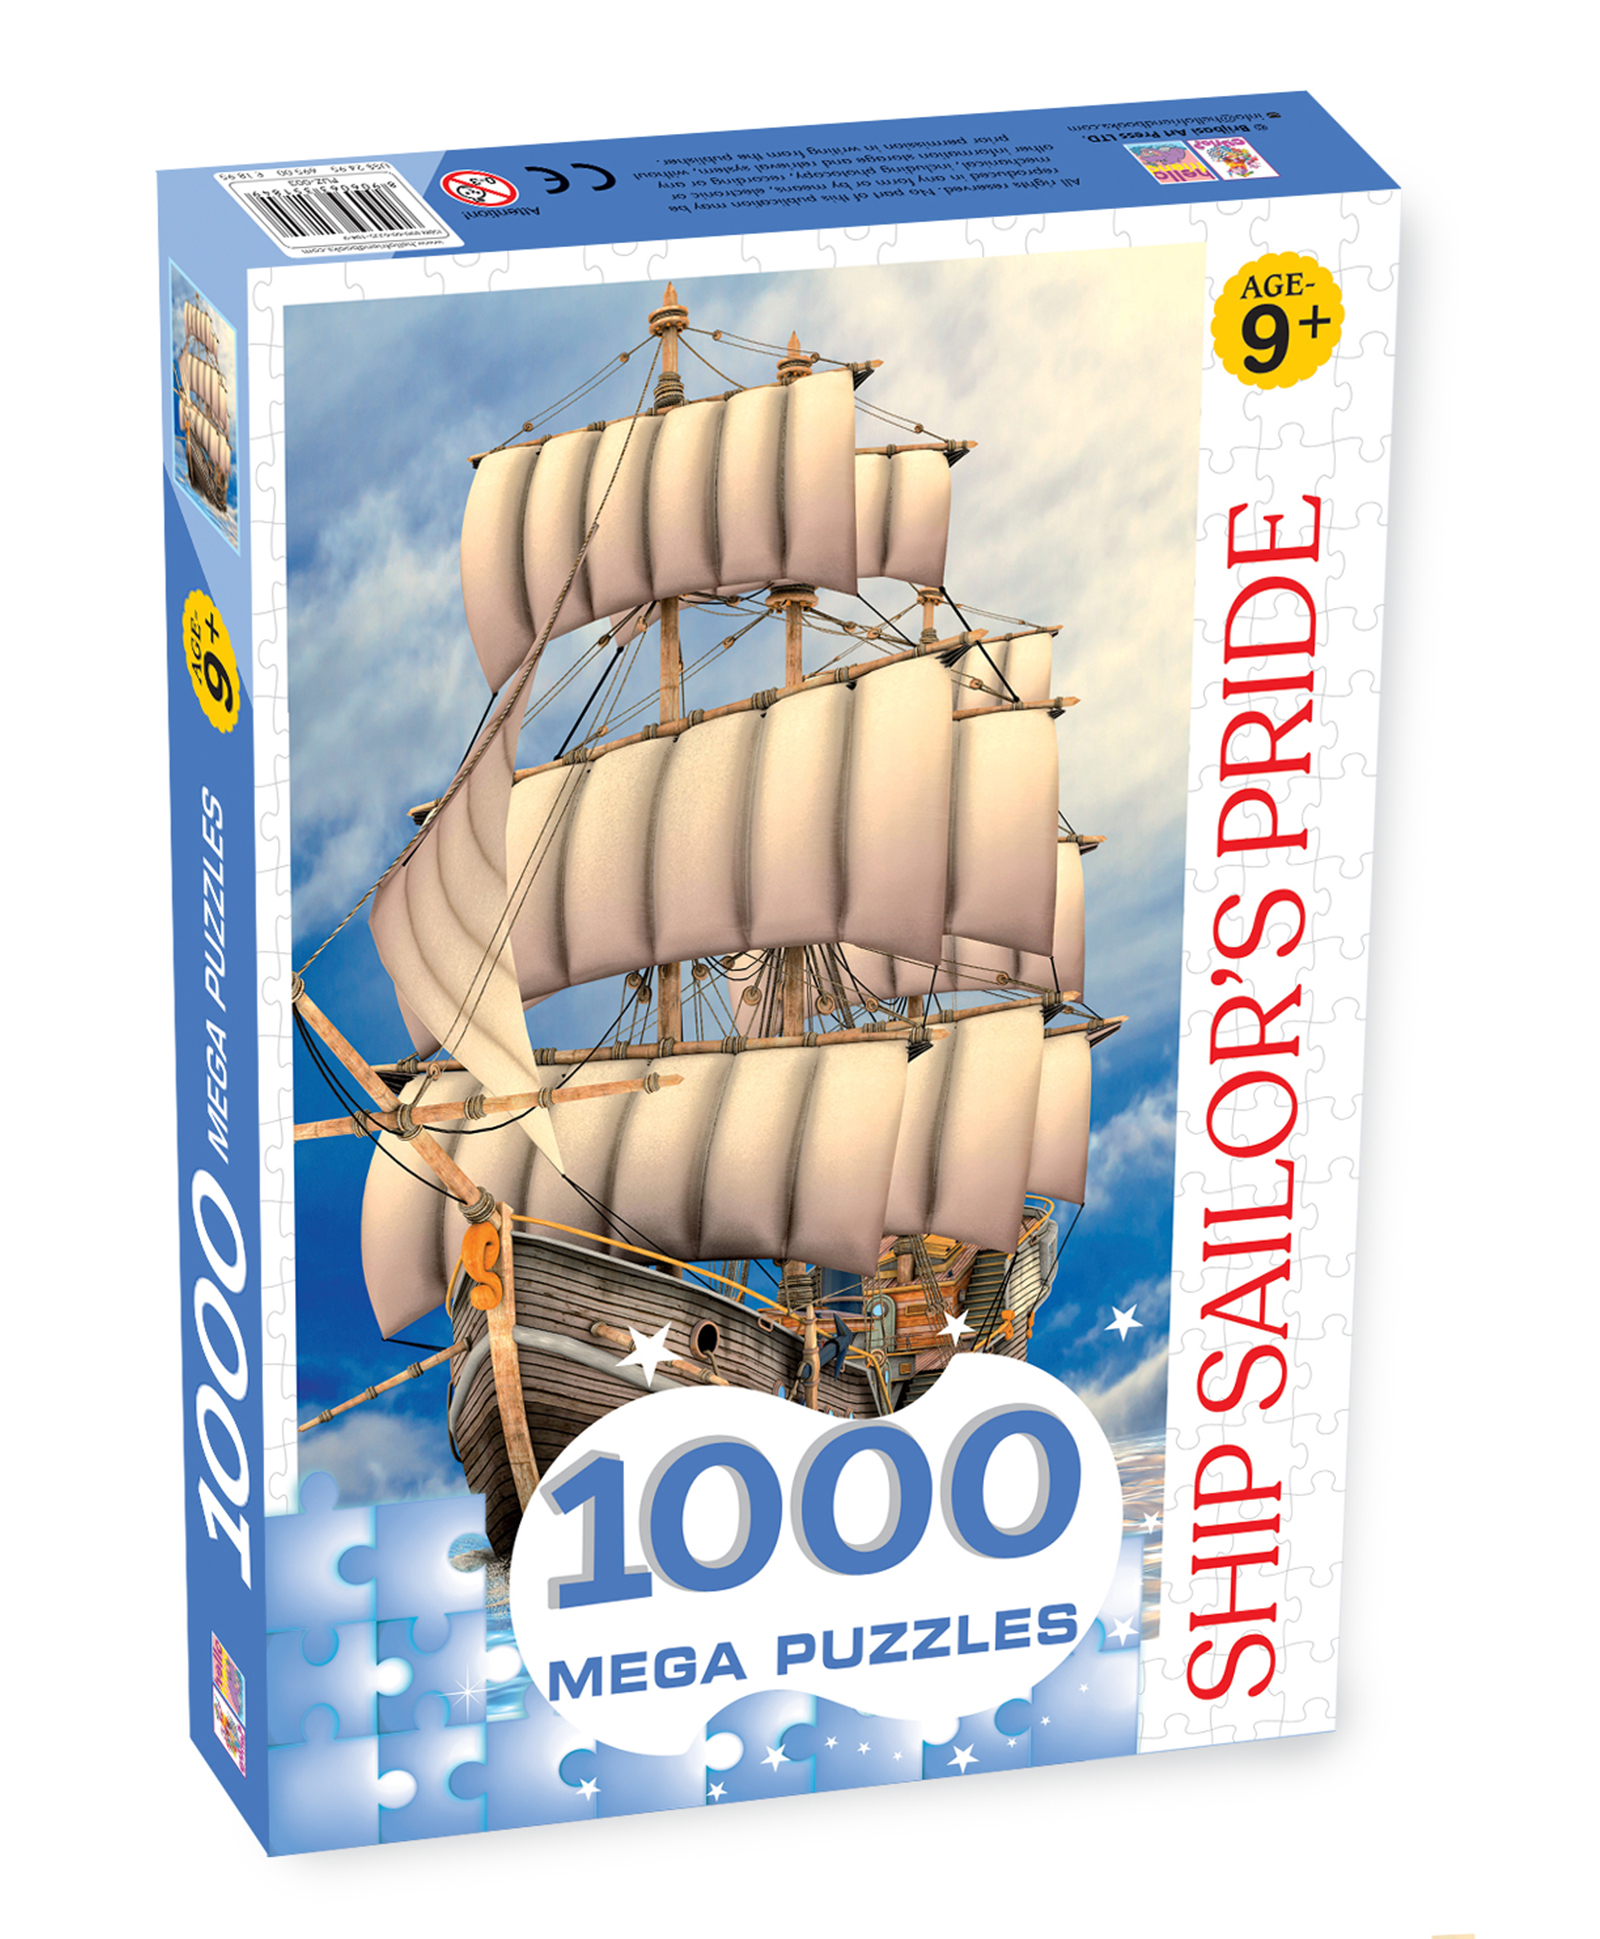 Ship Sailor pride 1000 pcs Puzzle Box 